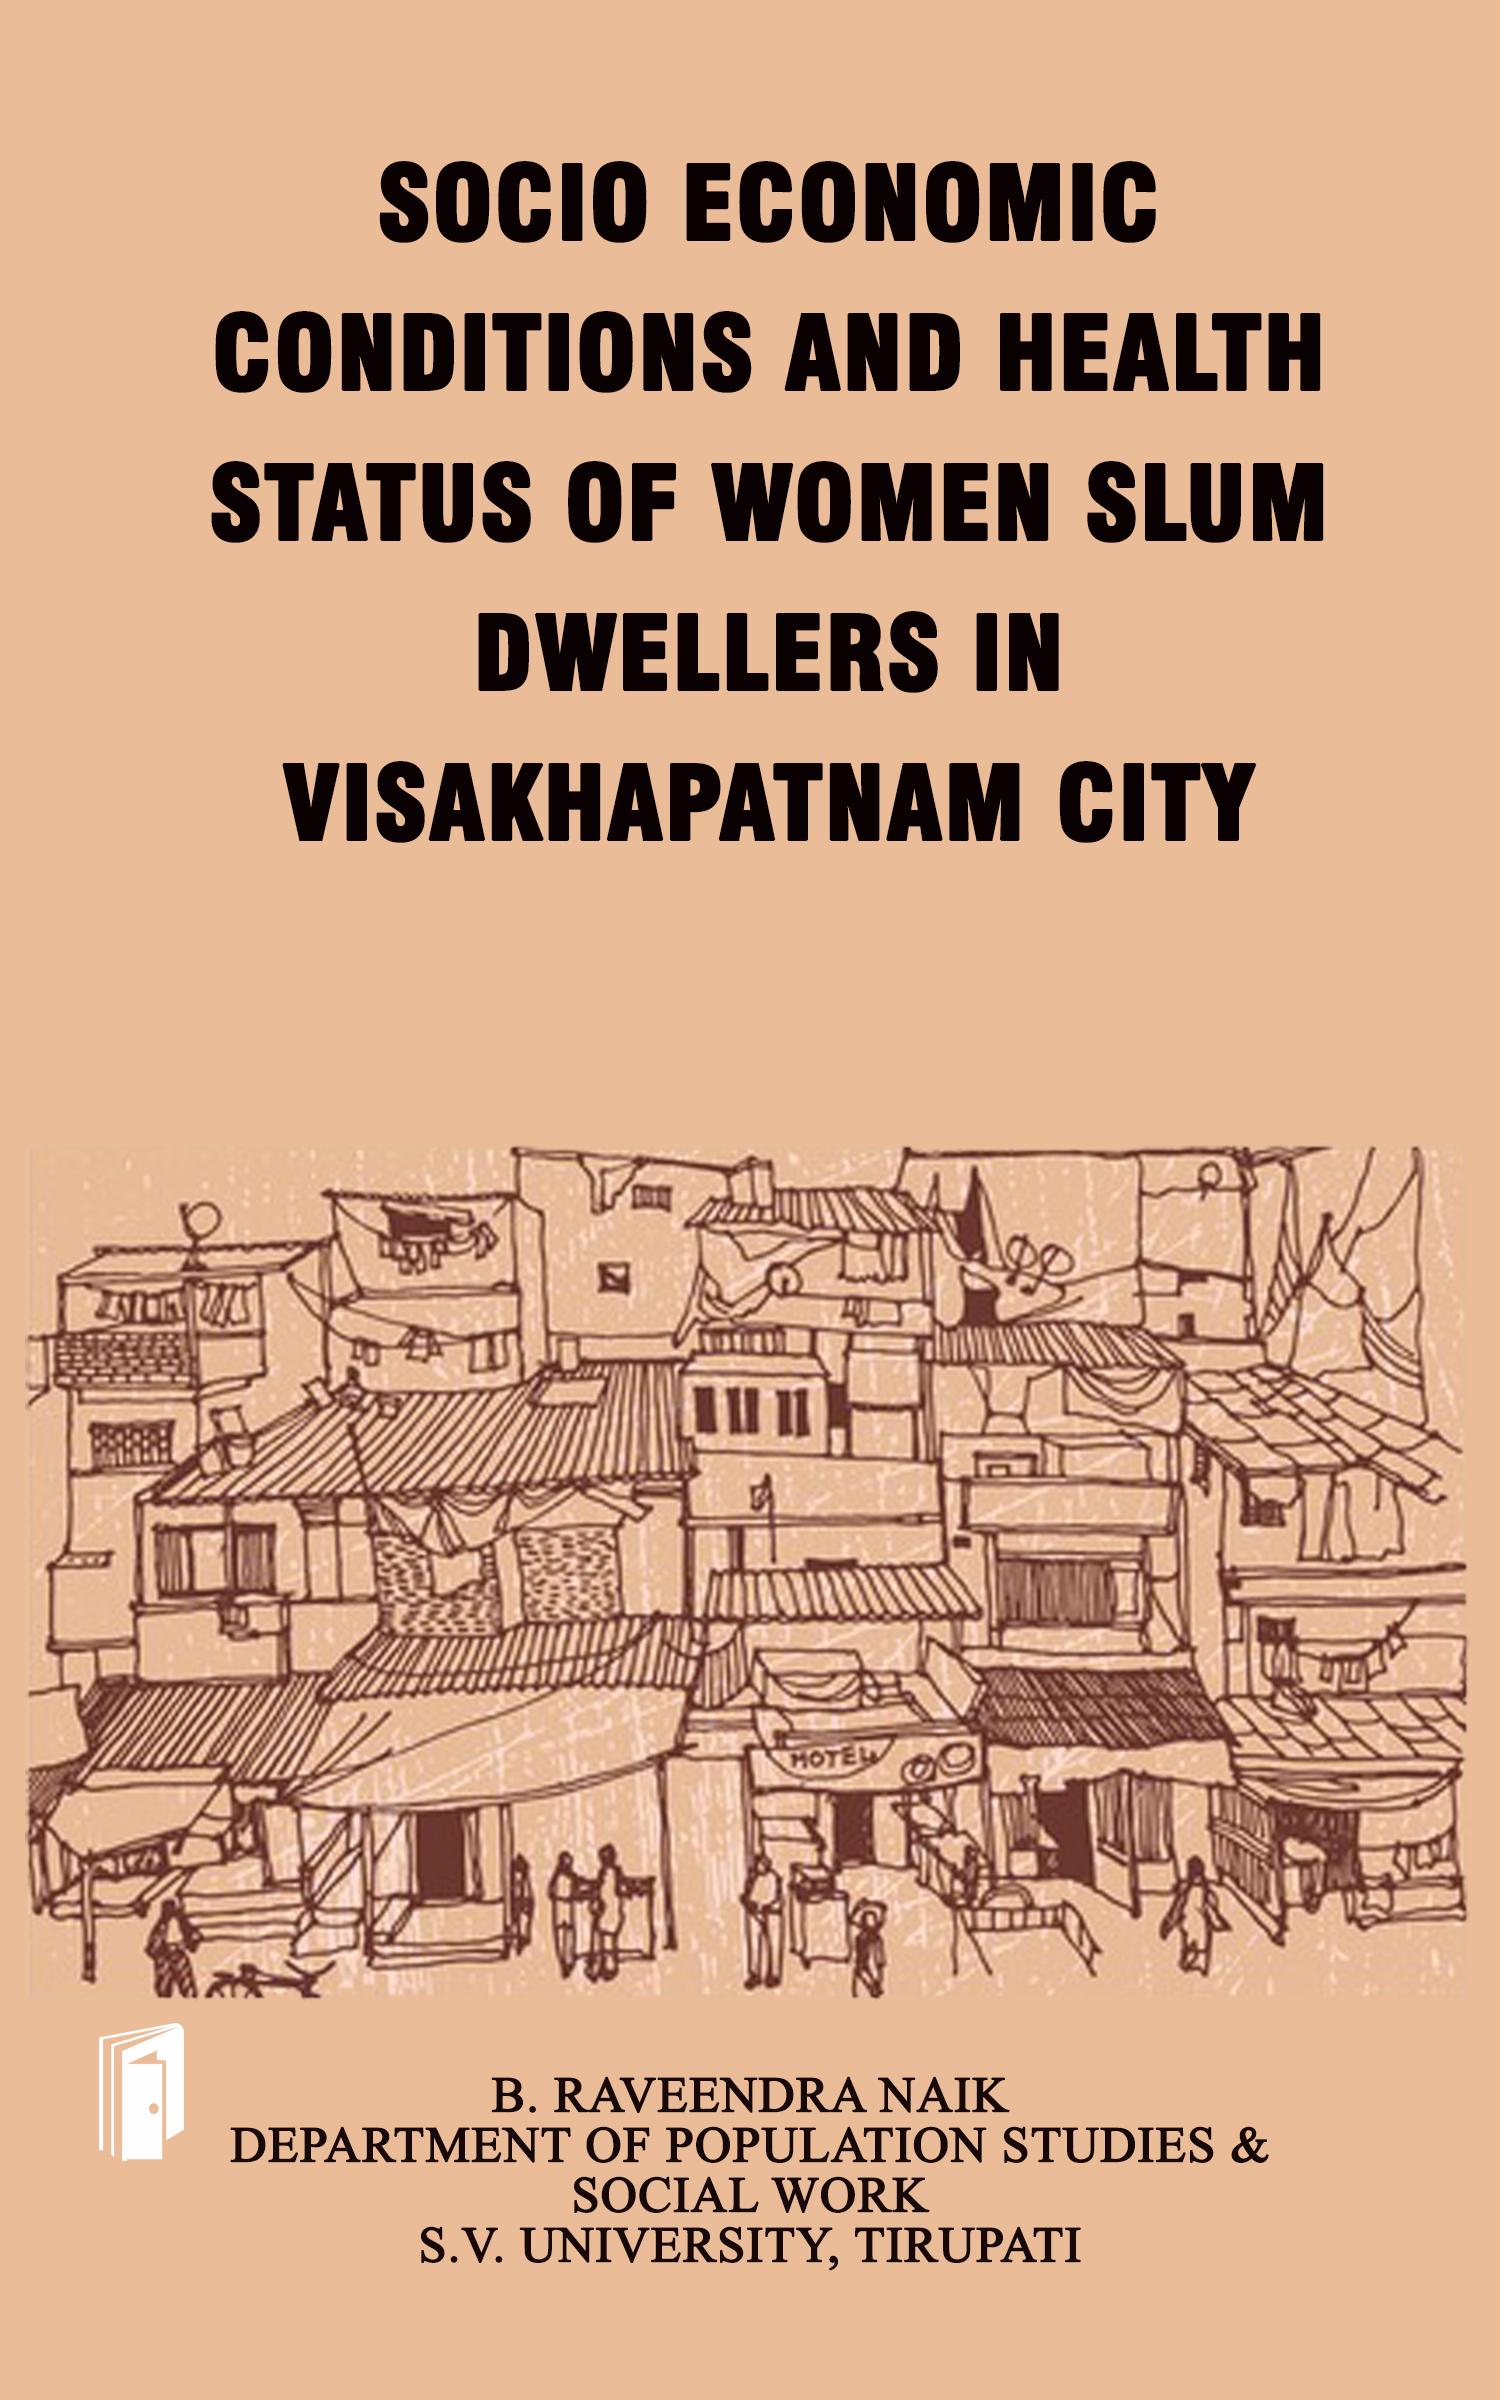 SOCIO ECONOMIC CONDITIONS AND HEALTH STATUS OF WOMEN SLUM DWELLERS IN VISAKHAPATNAM CITY